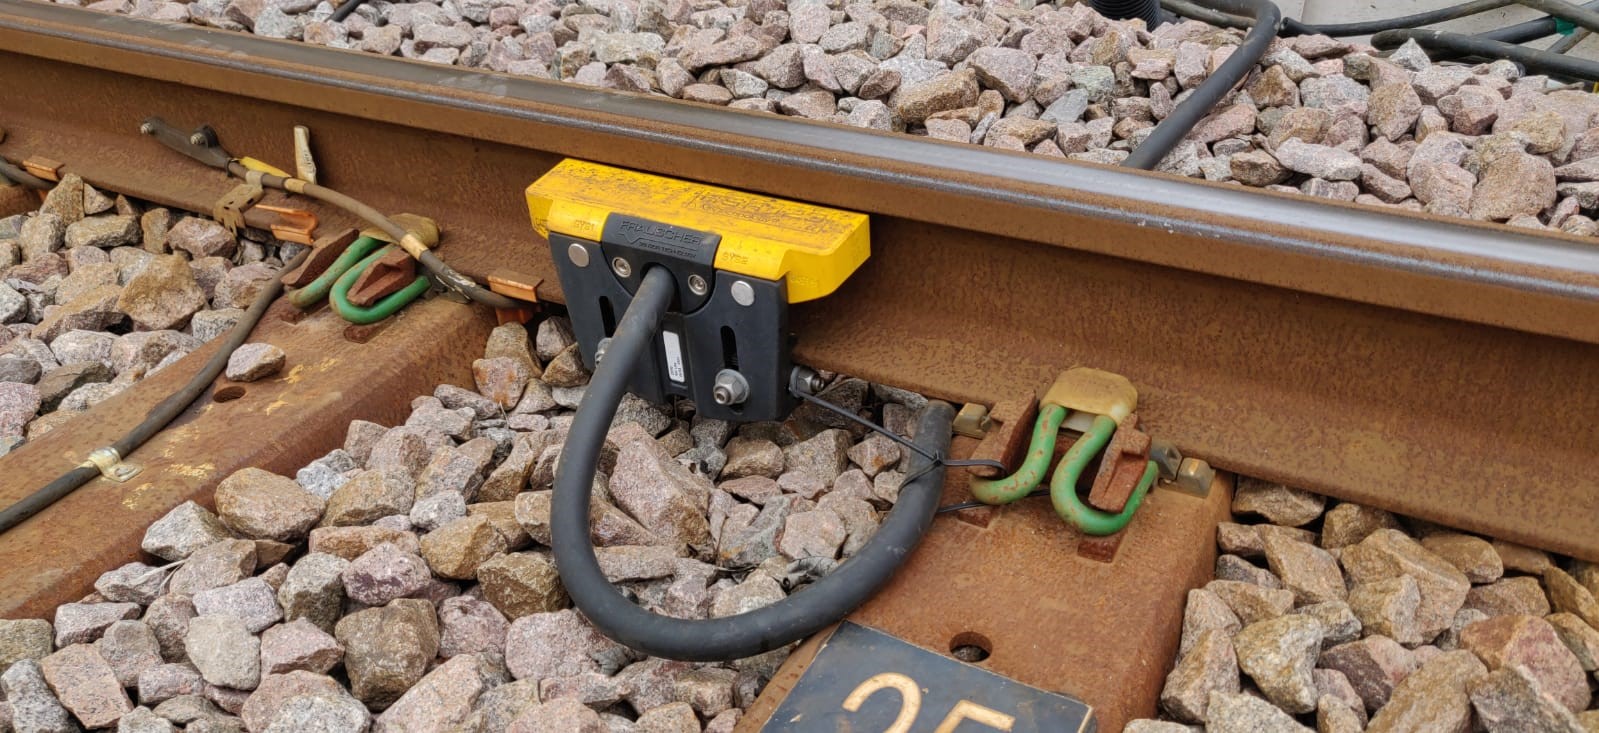 Axle Counter Box On Railway Tracks